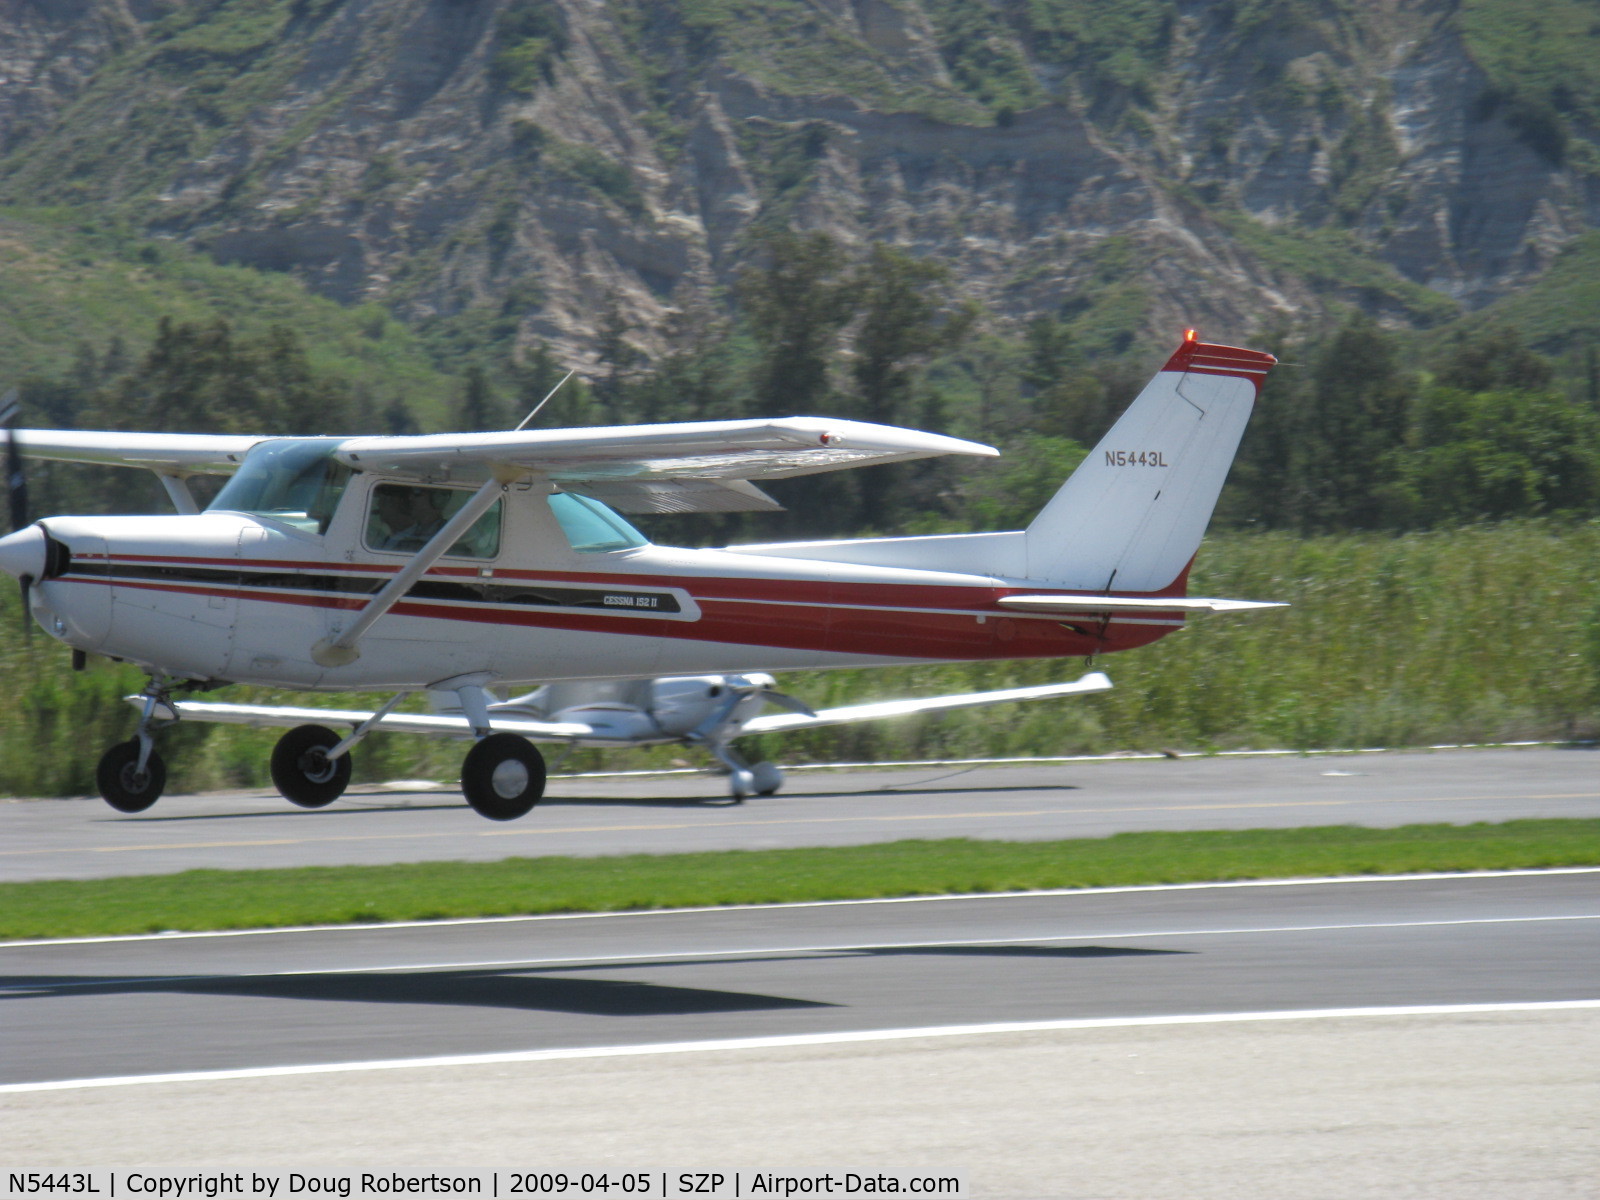 N5443L, 1980 Cessna 152 C/N 15284315, 1980 Cessna 152 II, Lycoming O-235-L2C 110 Hp (high compression engine for 100LL), takeoff climb Rwy 04